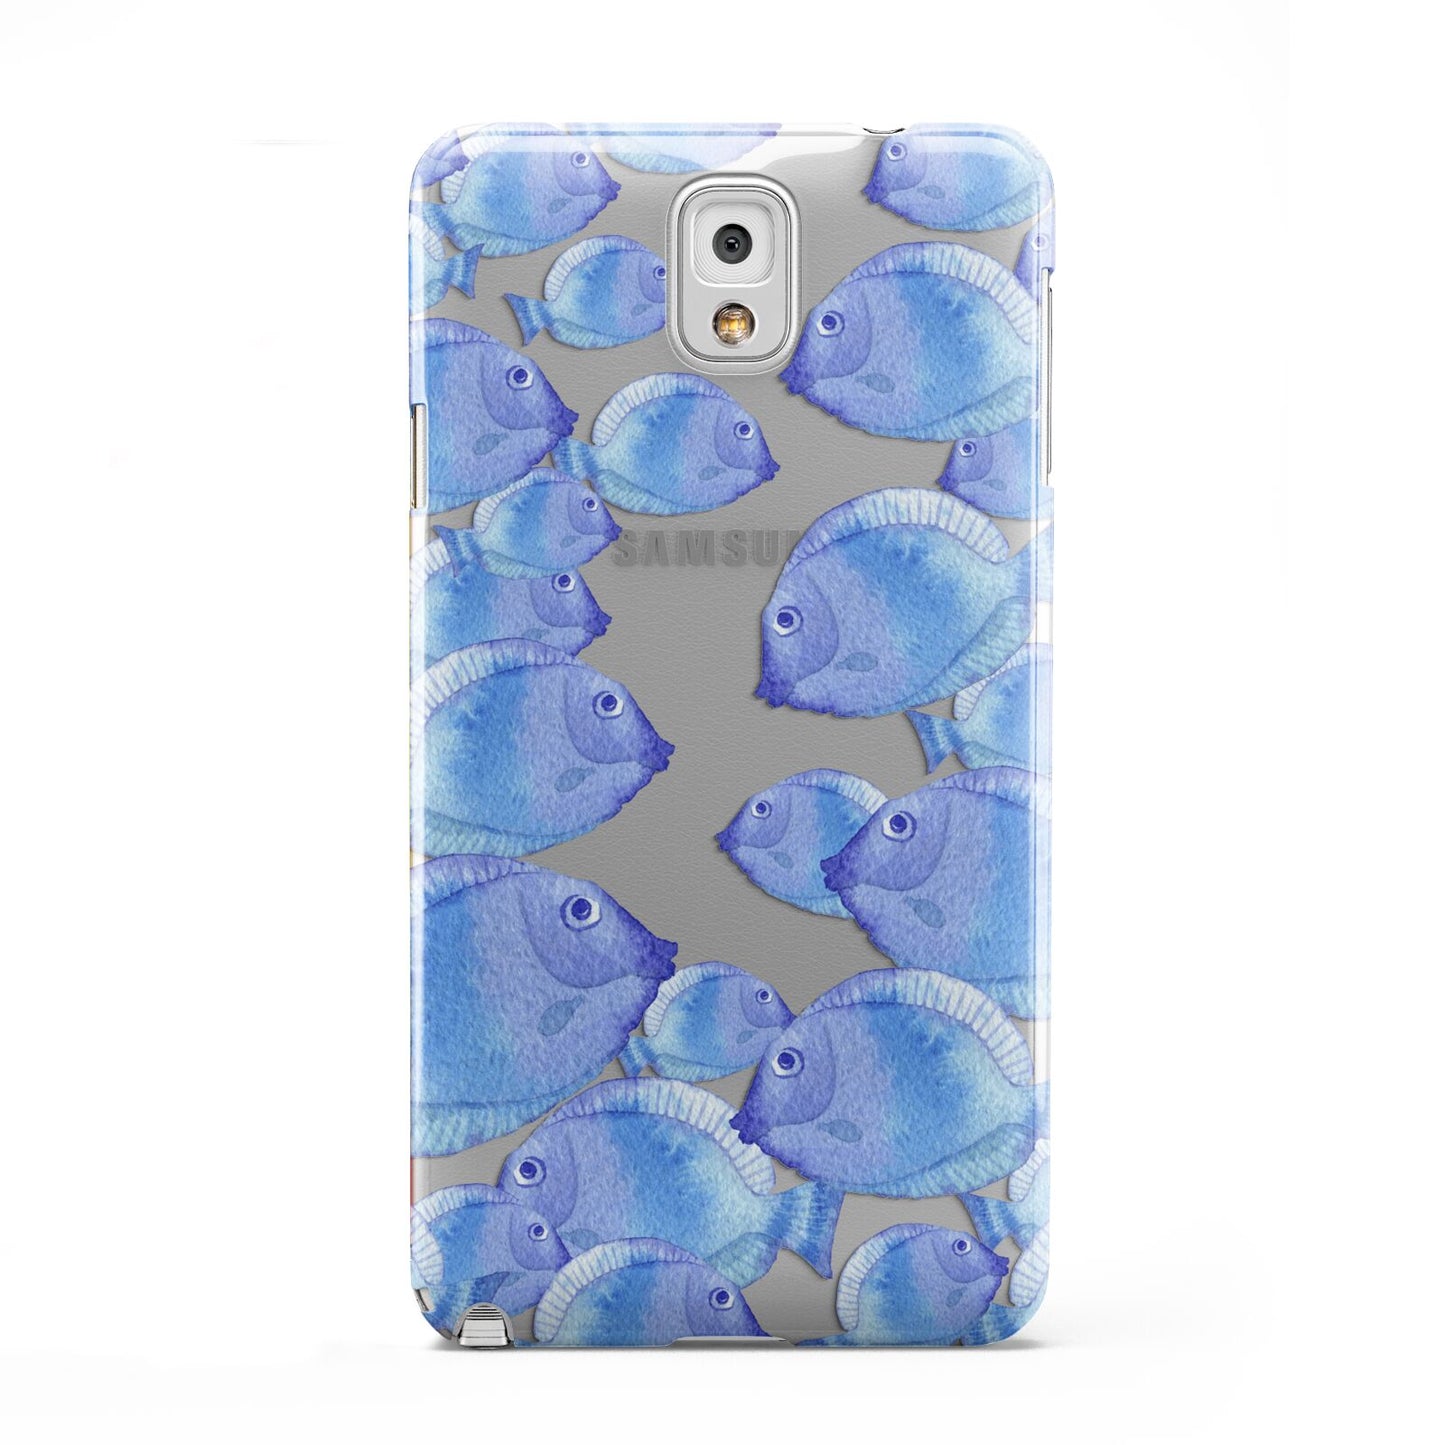 Fish Samsung Galaxy Note 3 Case